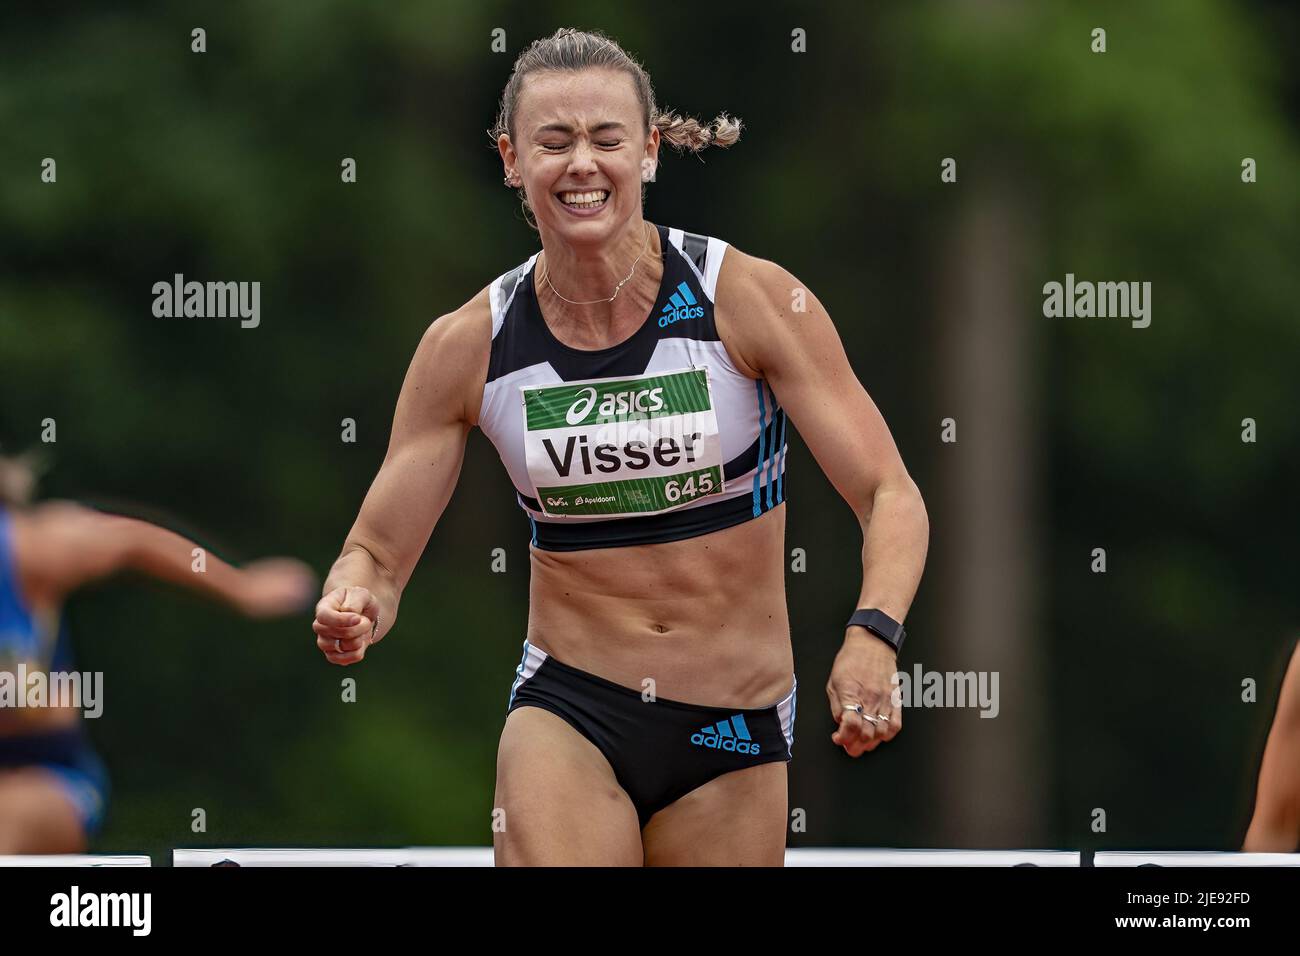 mannetje Aannemelijk Onderscheppen 2022-06-26 13:29:18 APELDOORN - Athlete Nadine Visser during the 100 meter  hurdles section at the Dutch Athletics Championships. ANP RONALD  HOOGENDOORN netherlands out - belgium out Stock Photo - Alamy